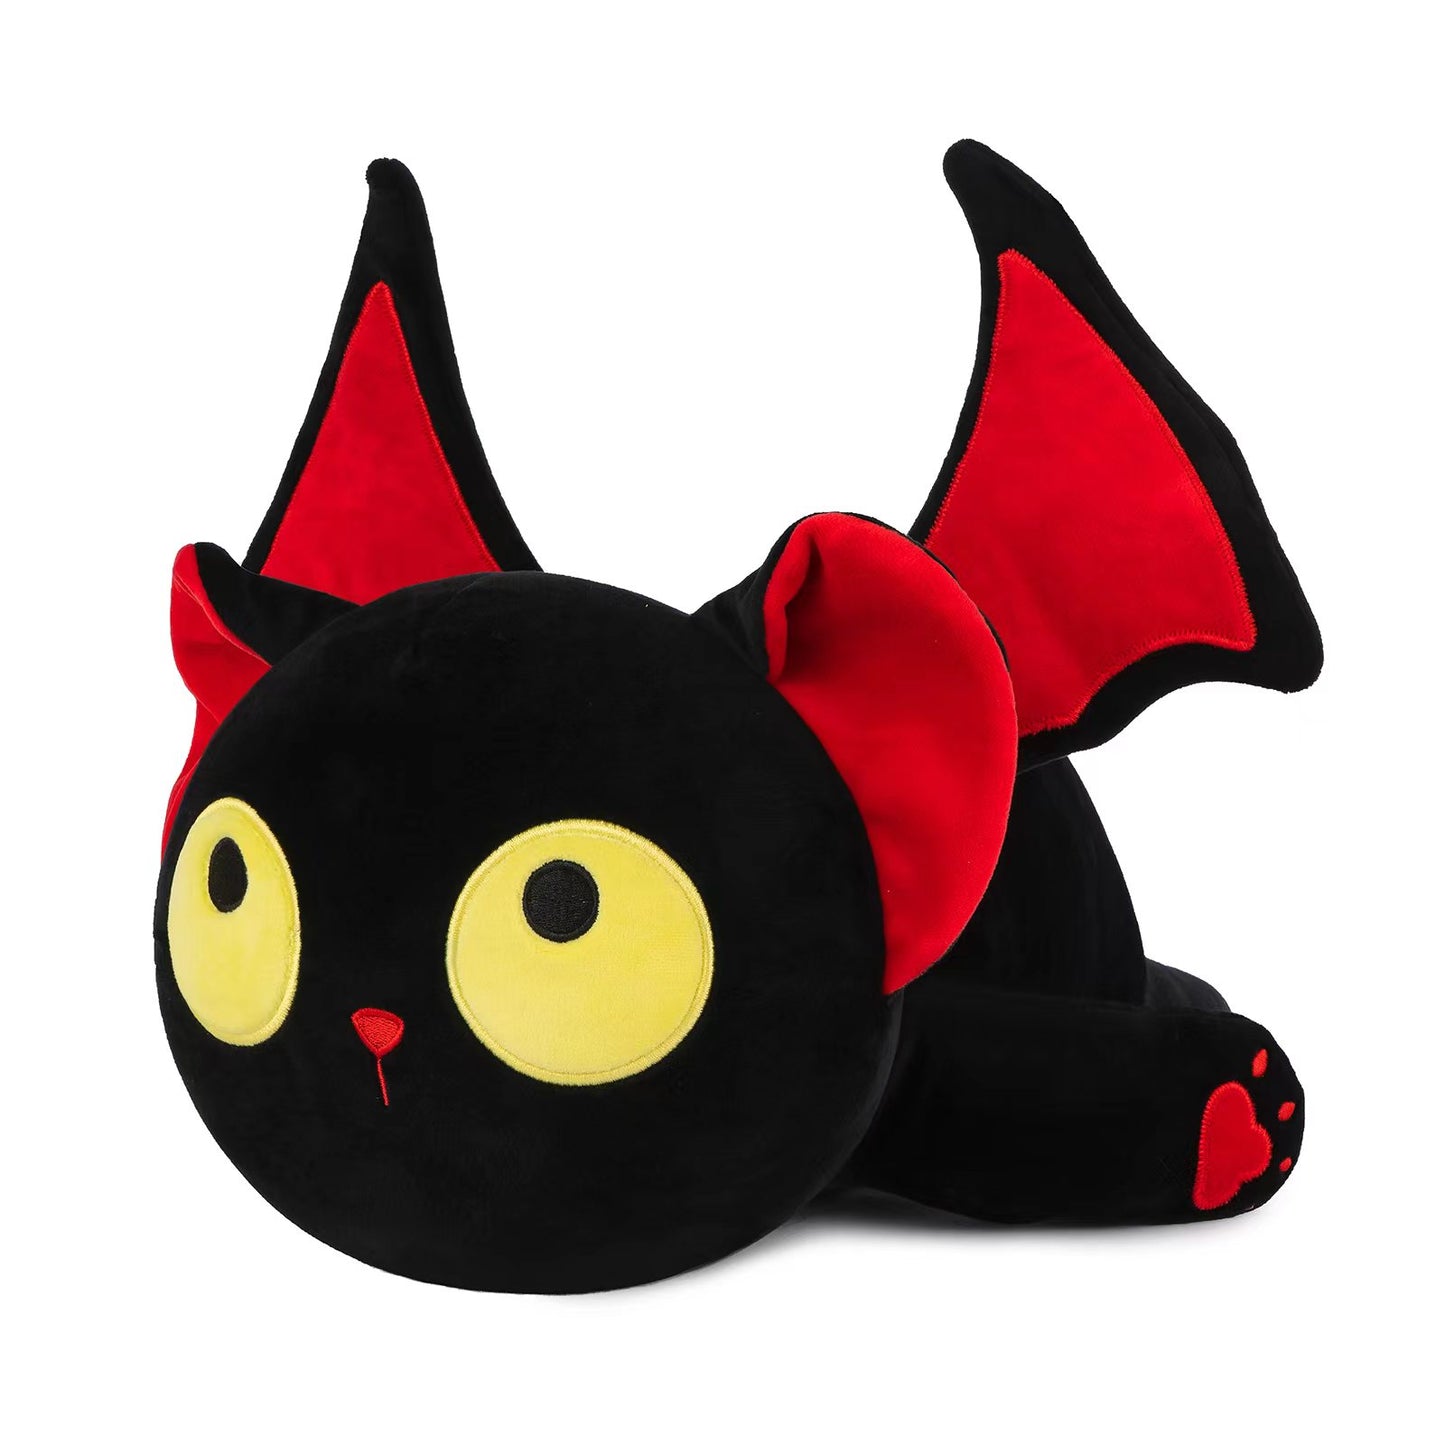 Niuniudaddy Black Cat Plush Toy